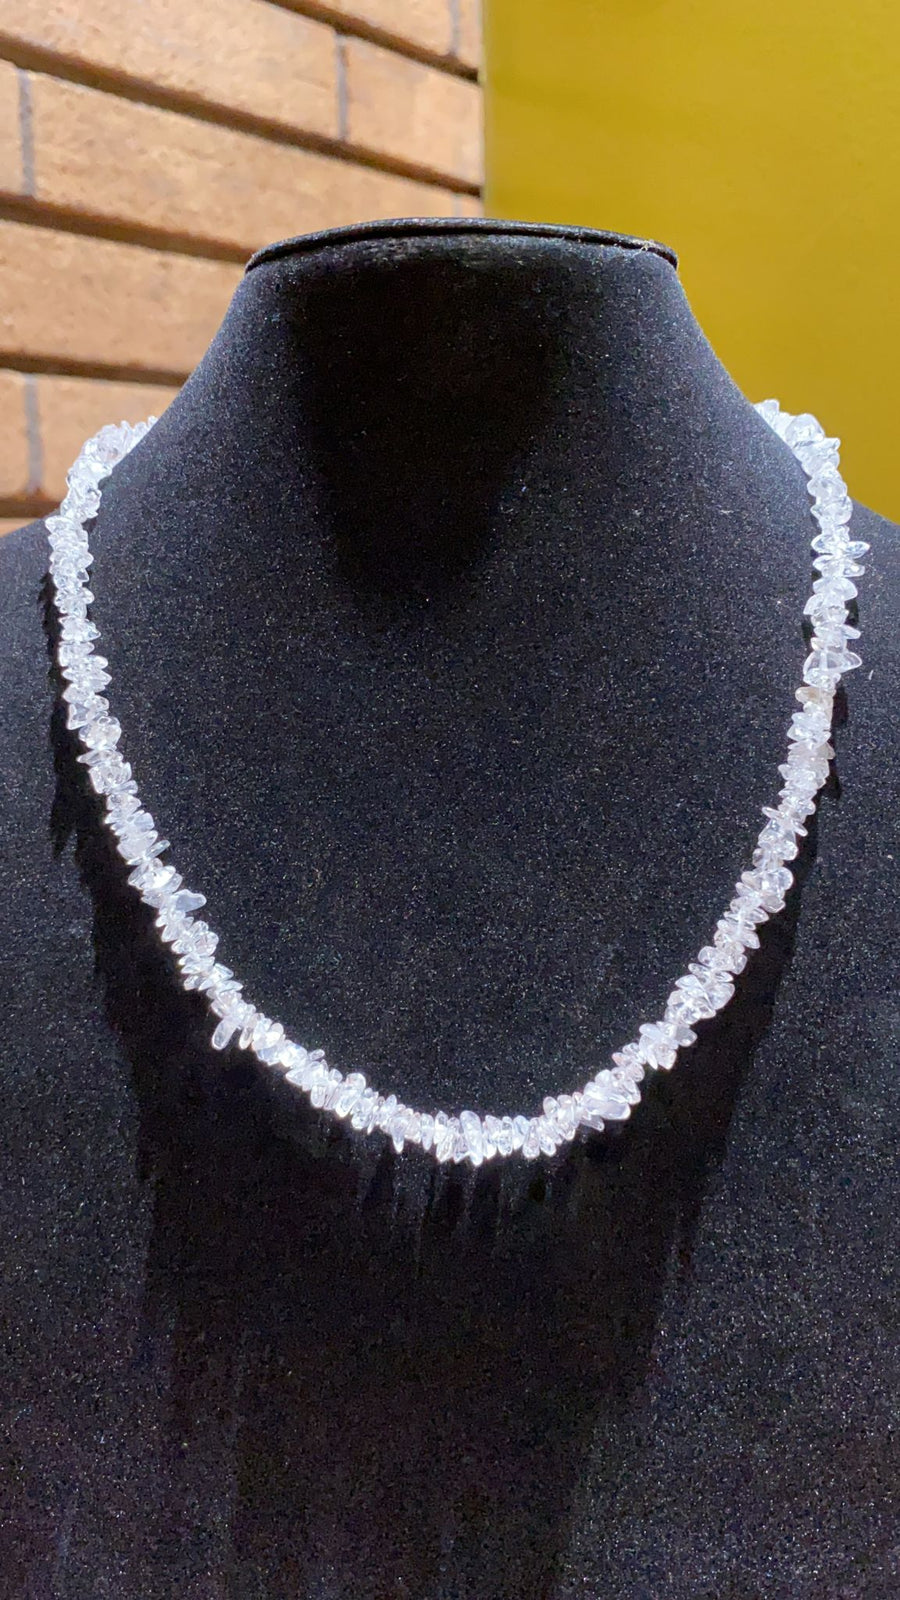 quartz crystal necklace